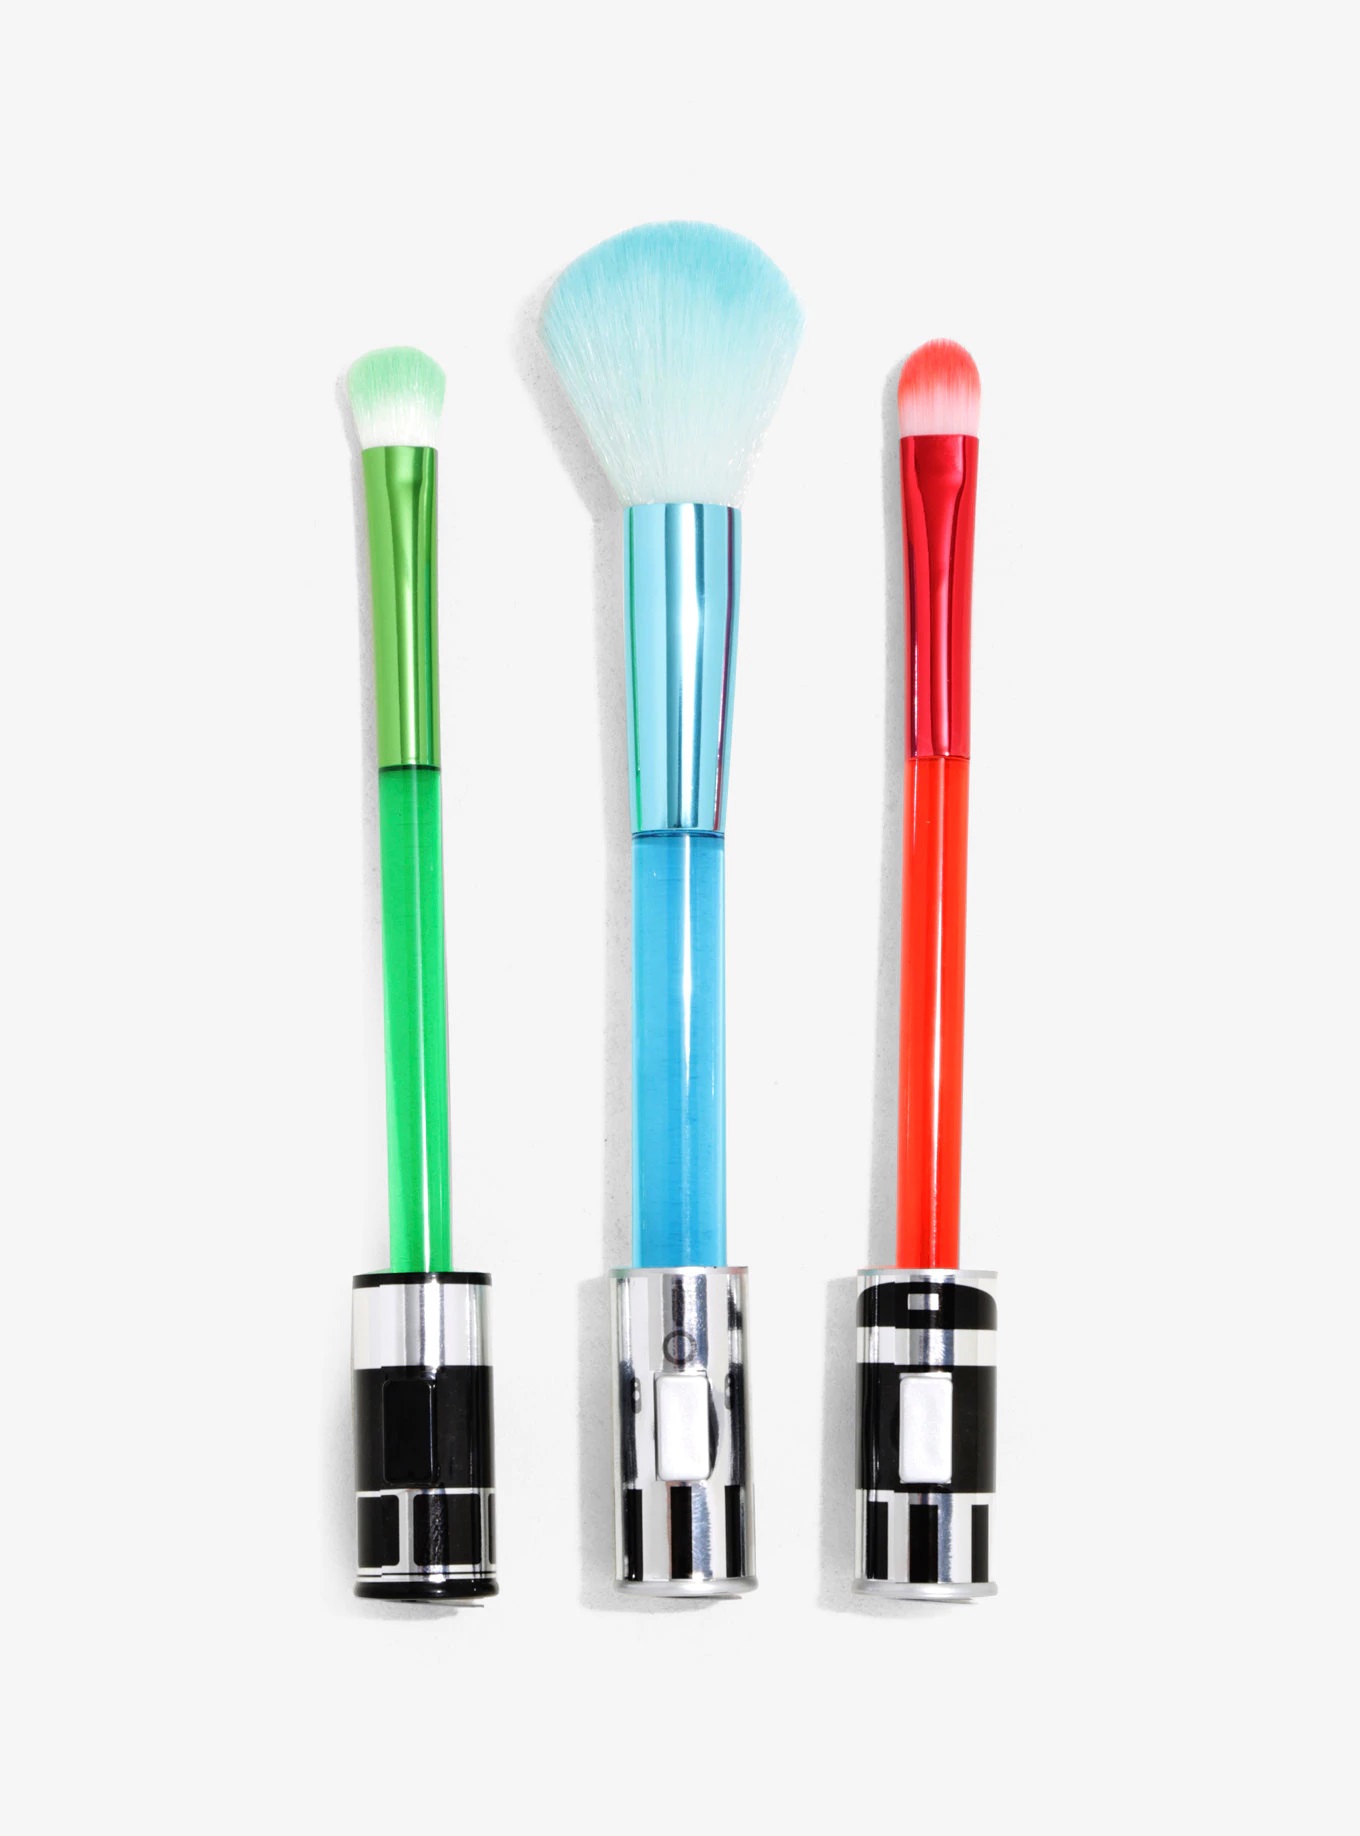 Her Universe x Star Wars Lightsaber Makeup Brush Set at Box Lunch